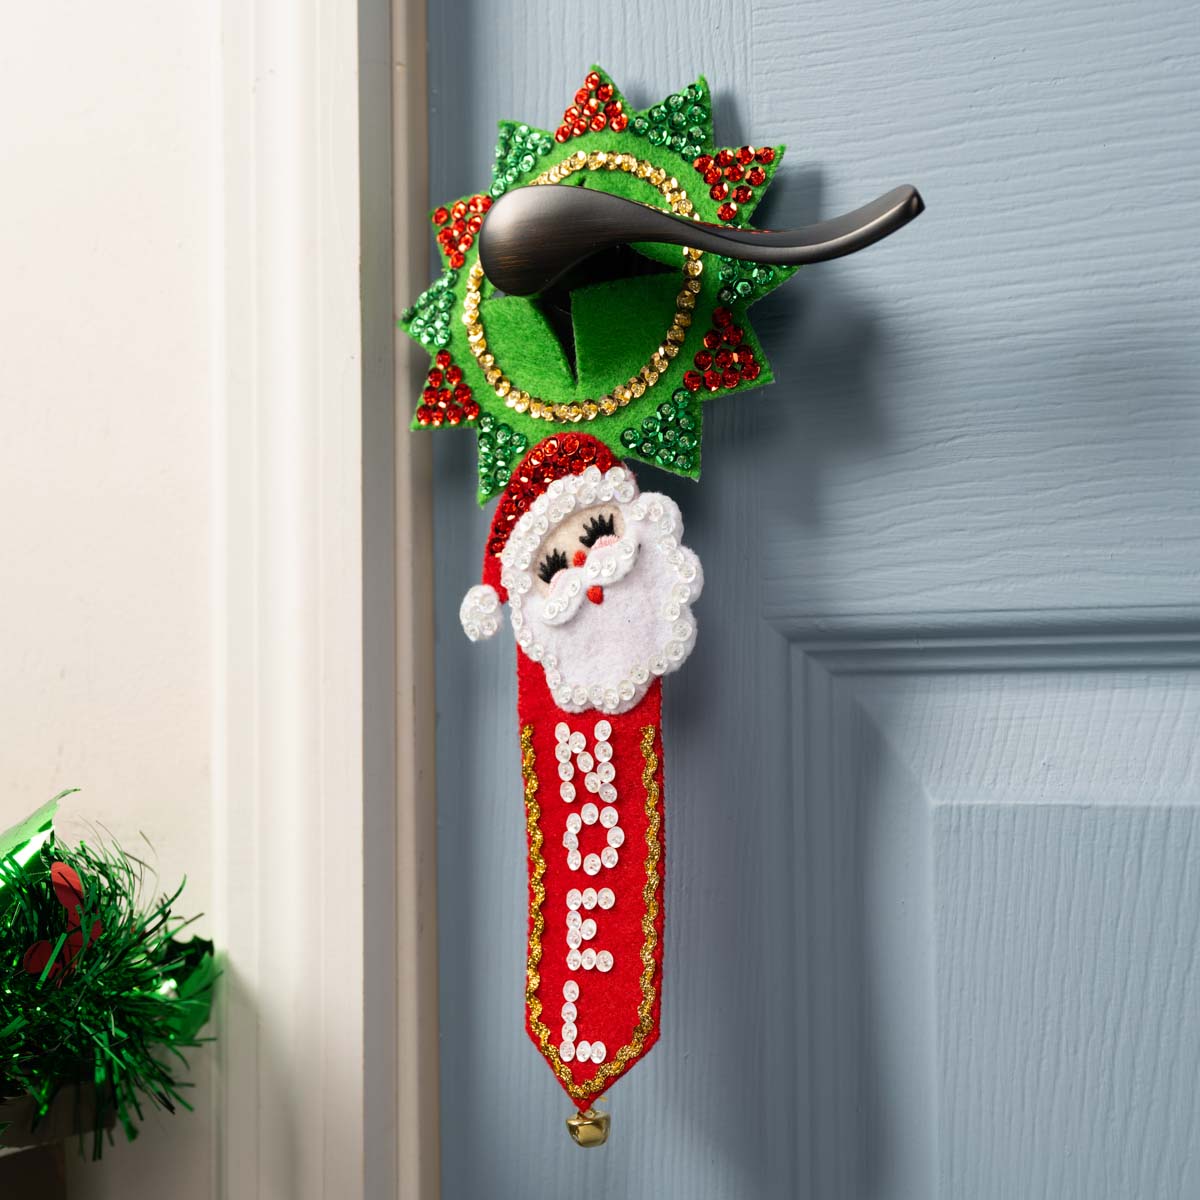 Bucilla ® Seasonal - Felt - Home Decor - Door Hangers - Jolly Noel - 89538E